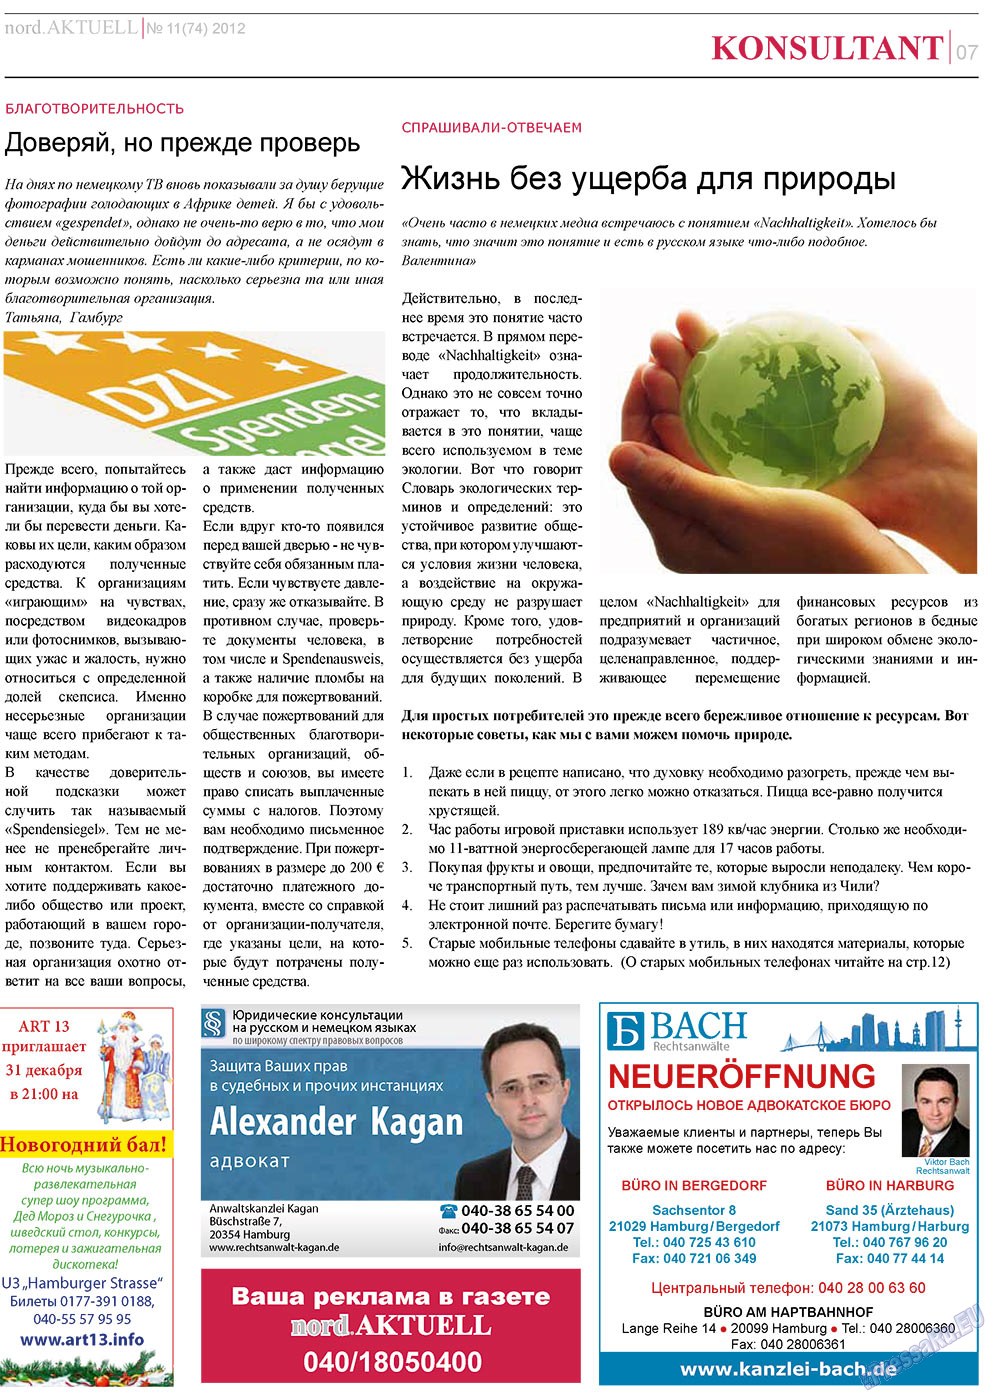 nord.Aktuell, газета. 2012 №11 стр.7